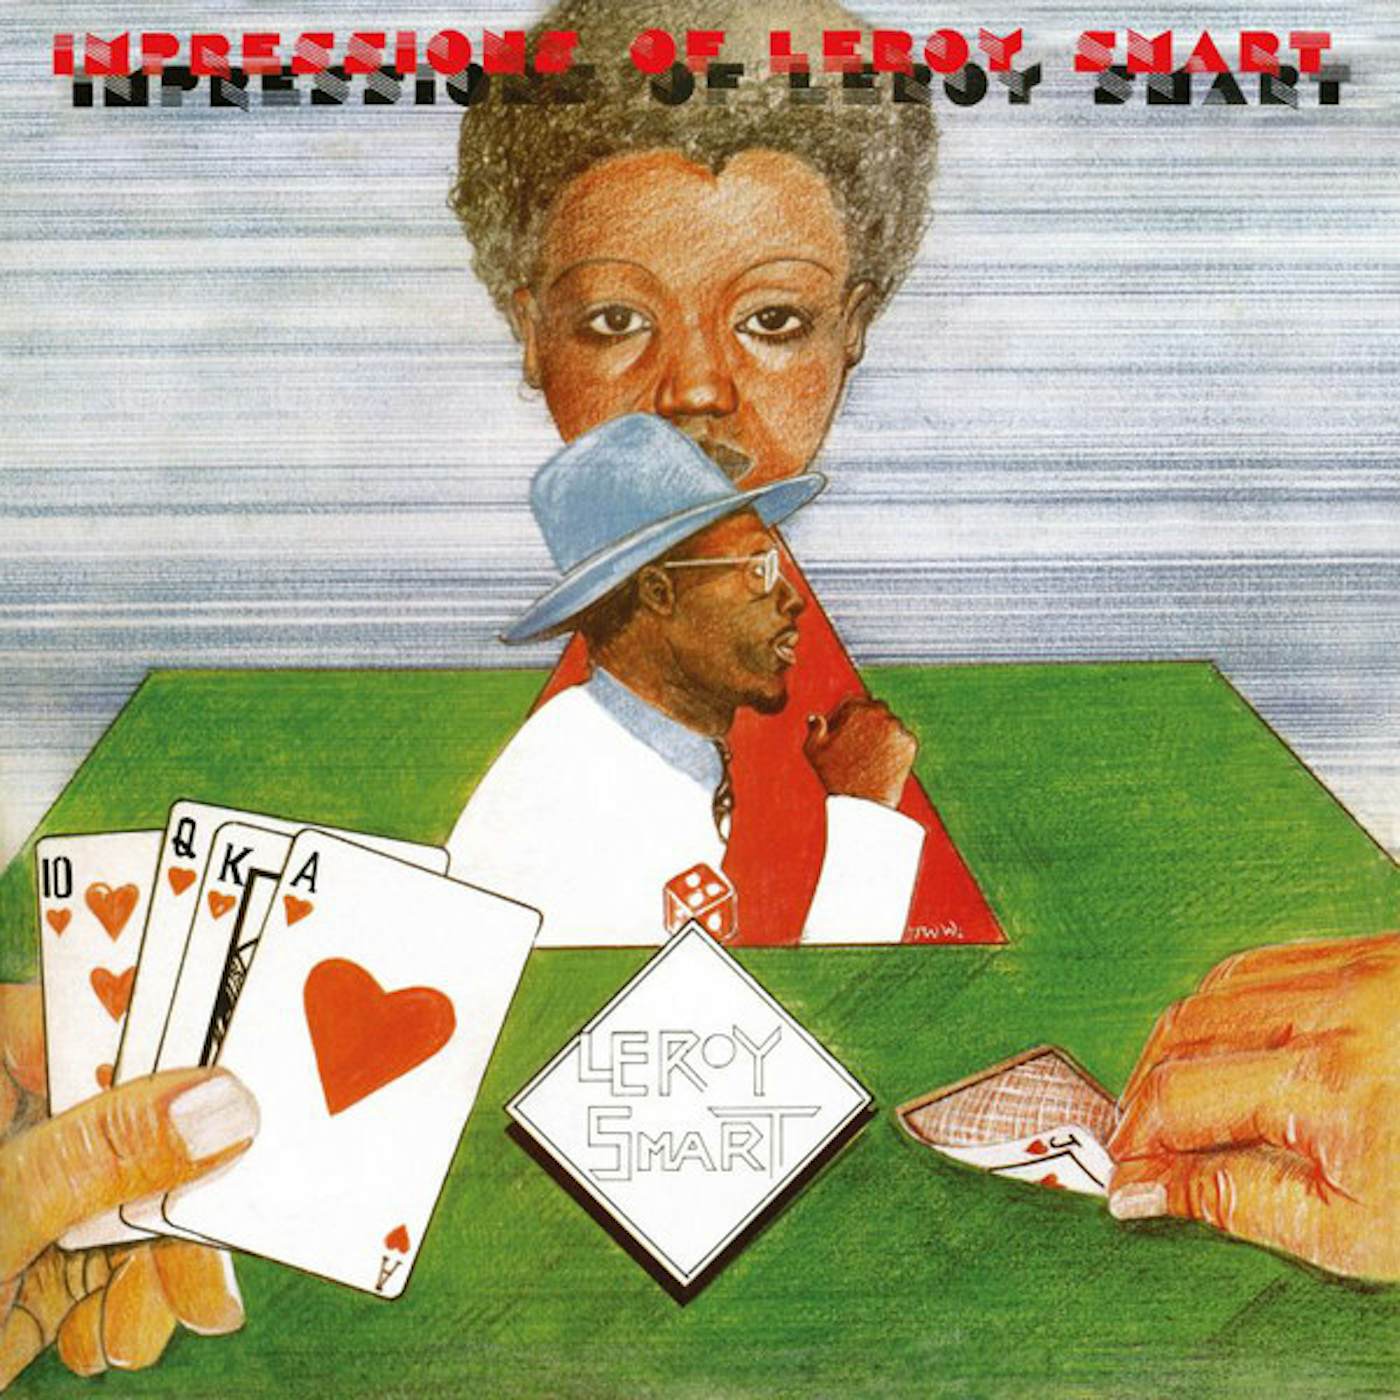 Leroy Smart IMPRESSIONS Vinyl Record